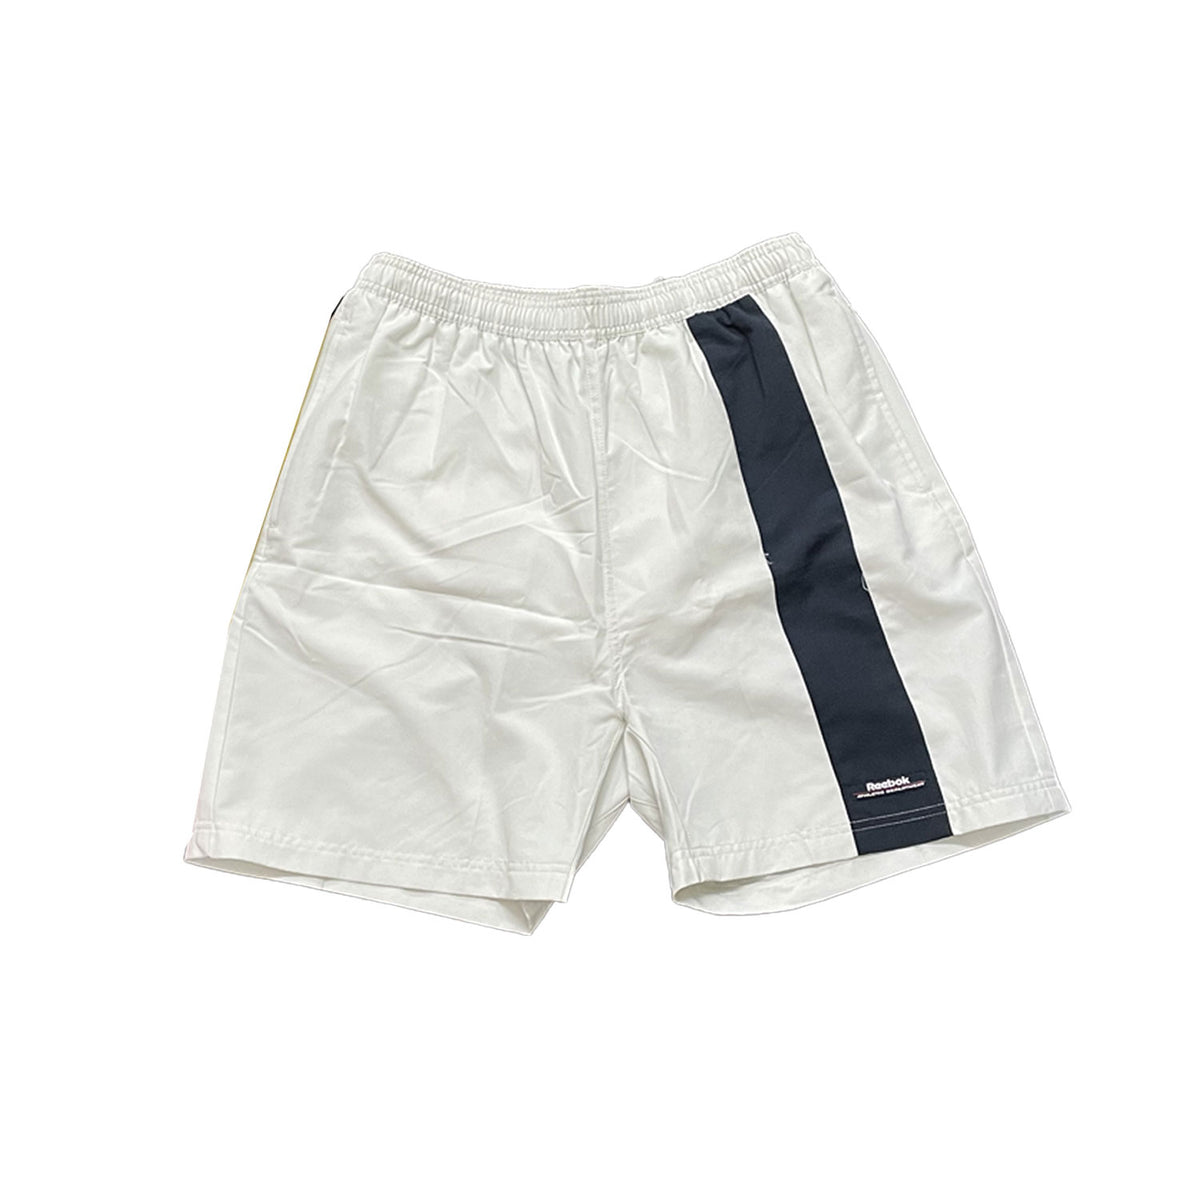 Reebok Original Mens Clearance Contrast Athletic Shorts 15